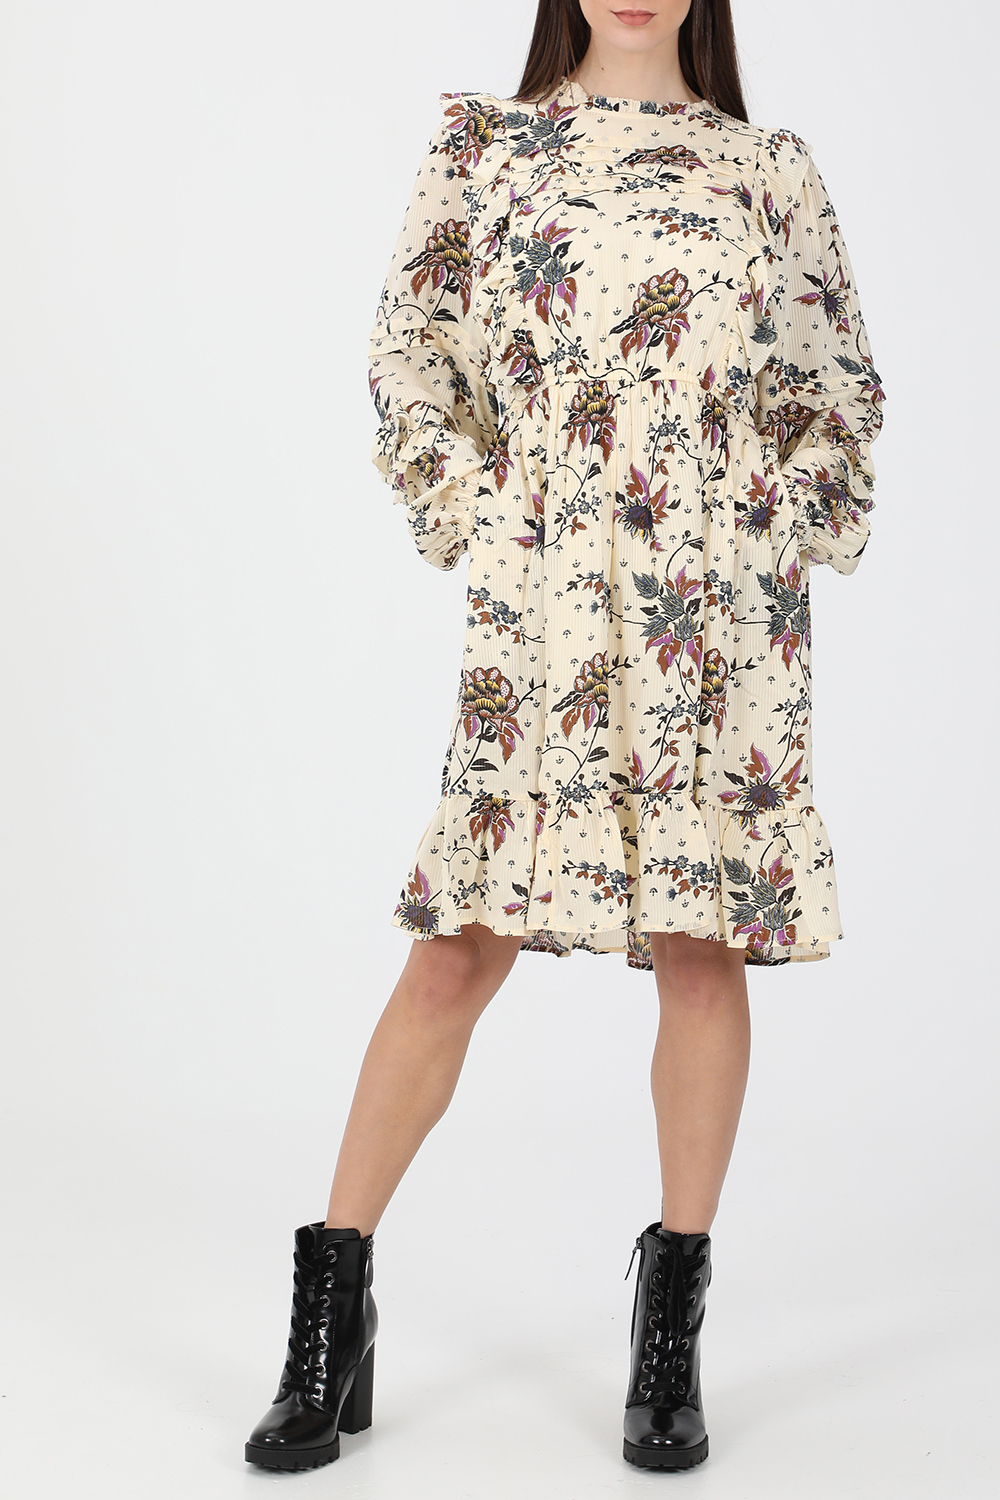 SCOTCH & SODA – Γυναικειο mini φορεμα SCOTCH & SODA Printed ruffle dress εκρου floral